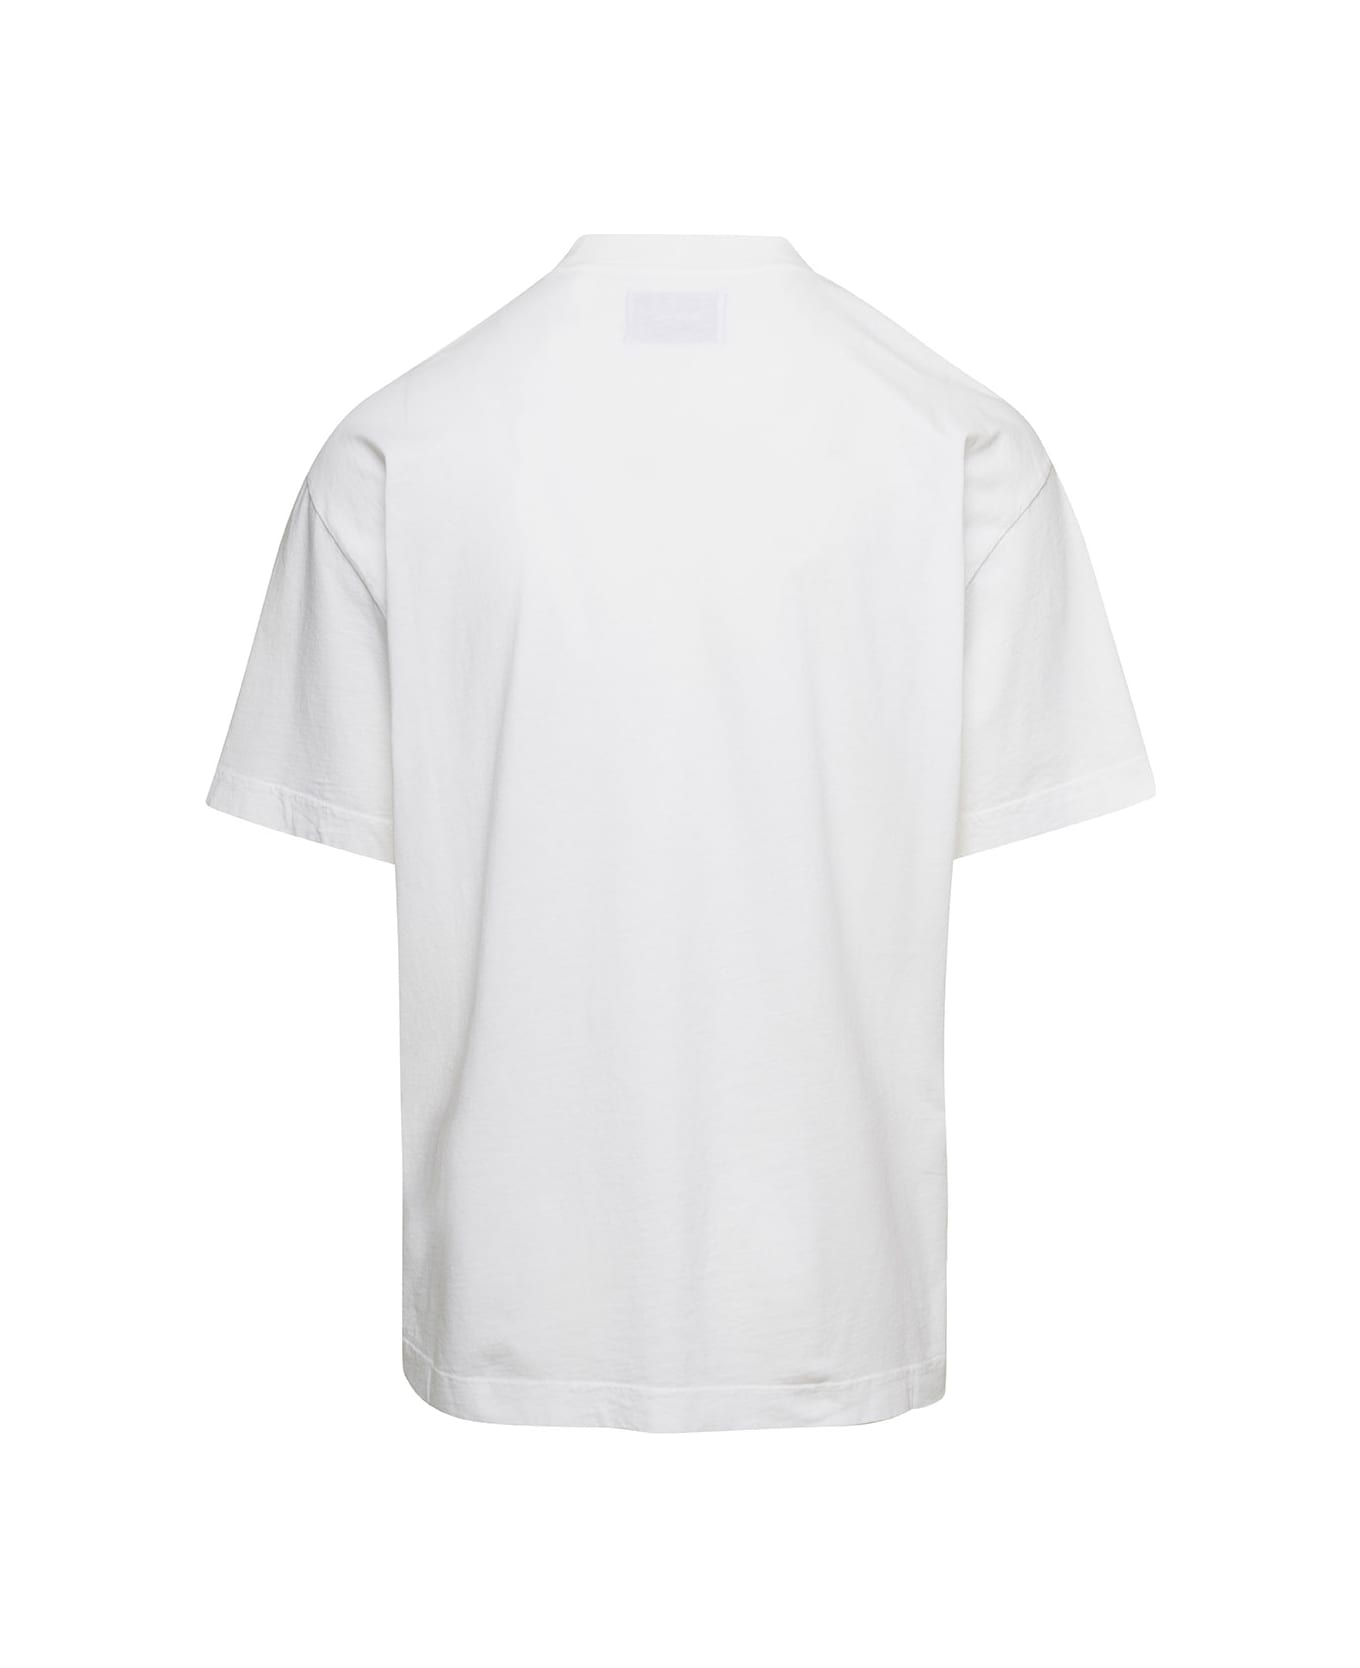 Bonsai White Crewneck T-shirt With Contrasting Logo Print In Cotton Man - White